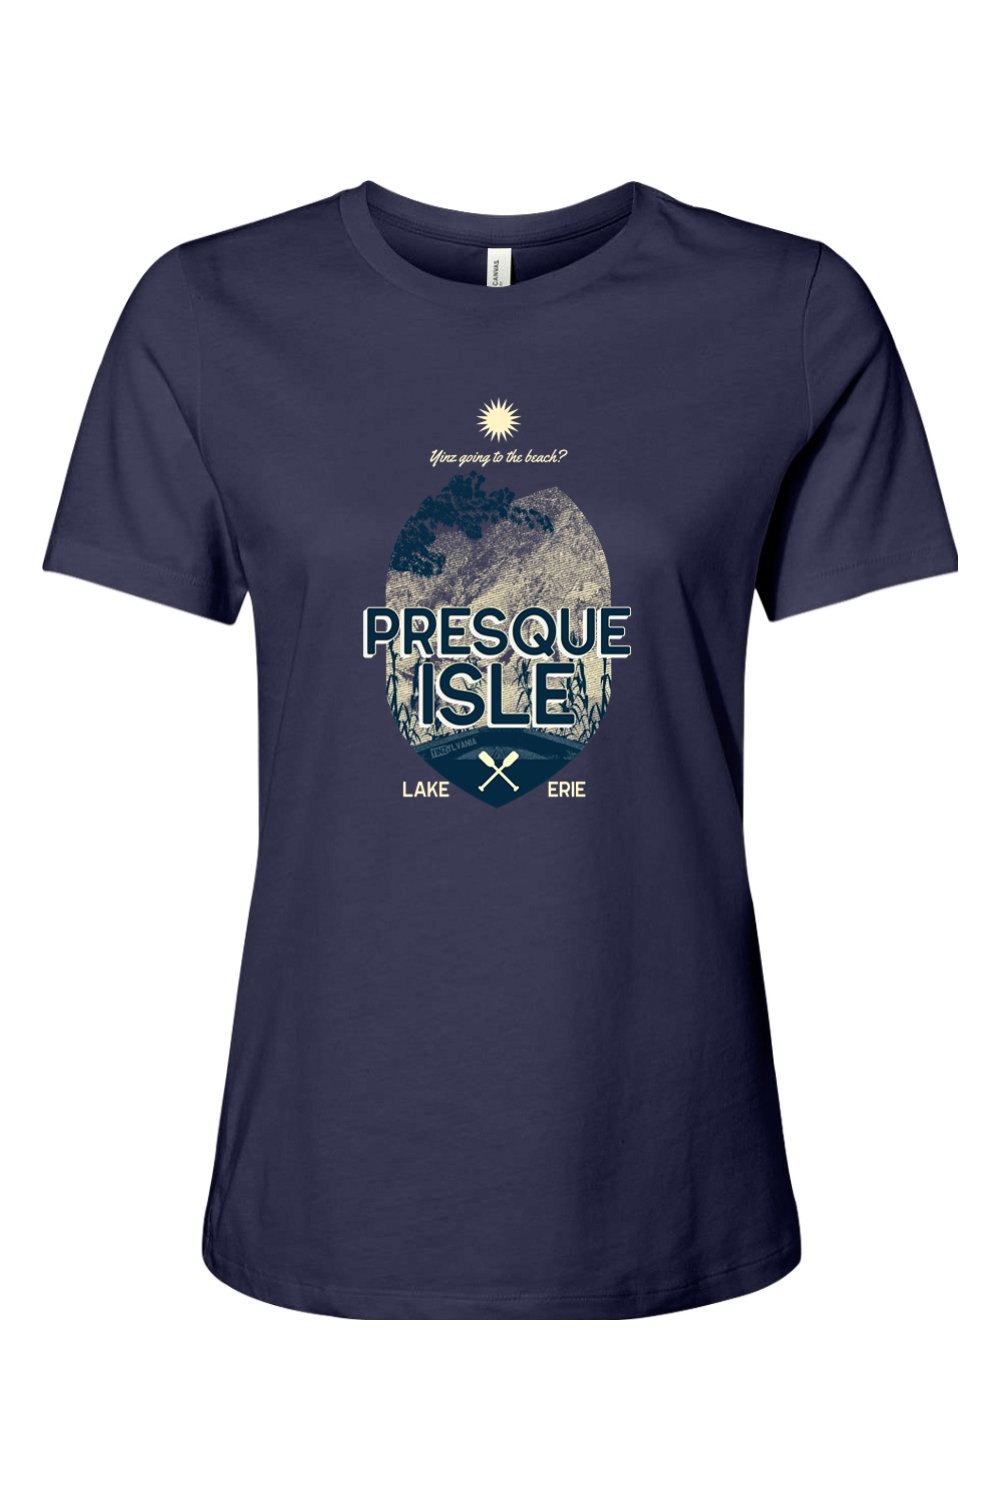 Presque Isle - Lake Erie, PA - Ladies Tee